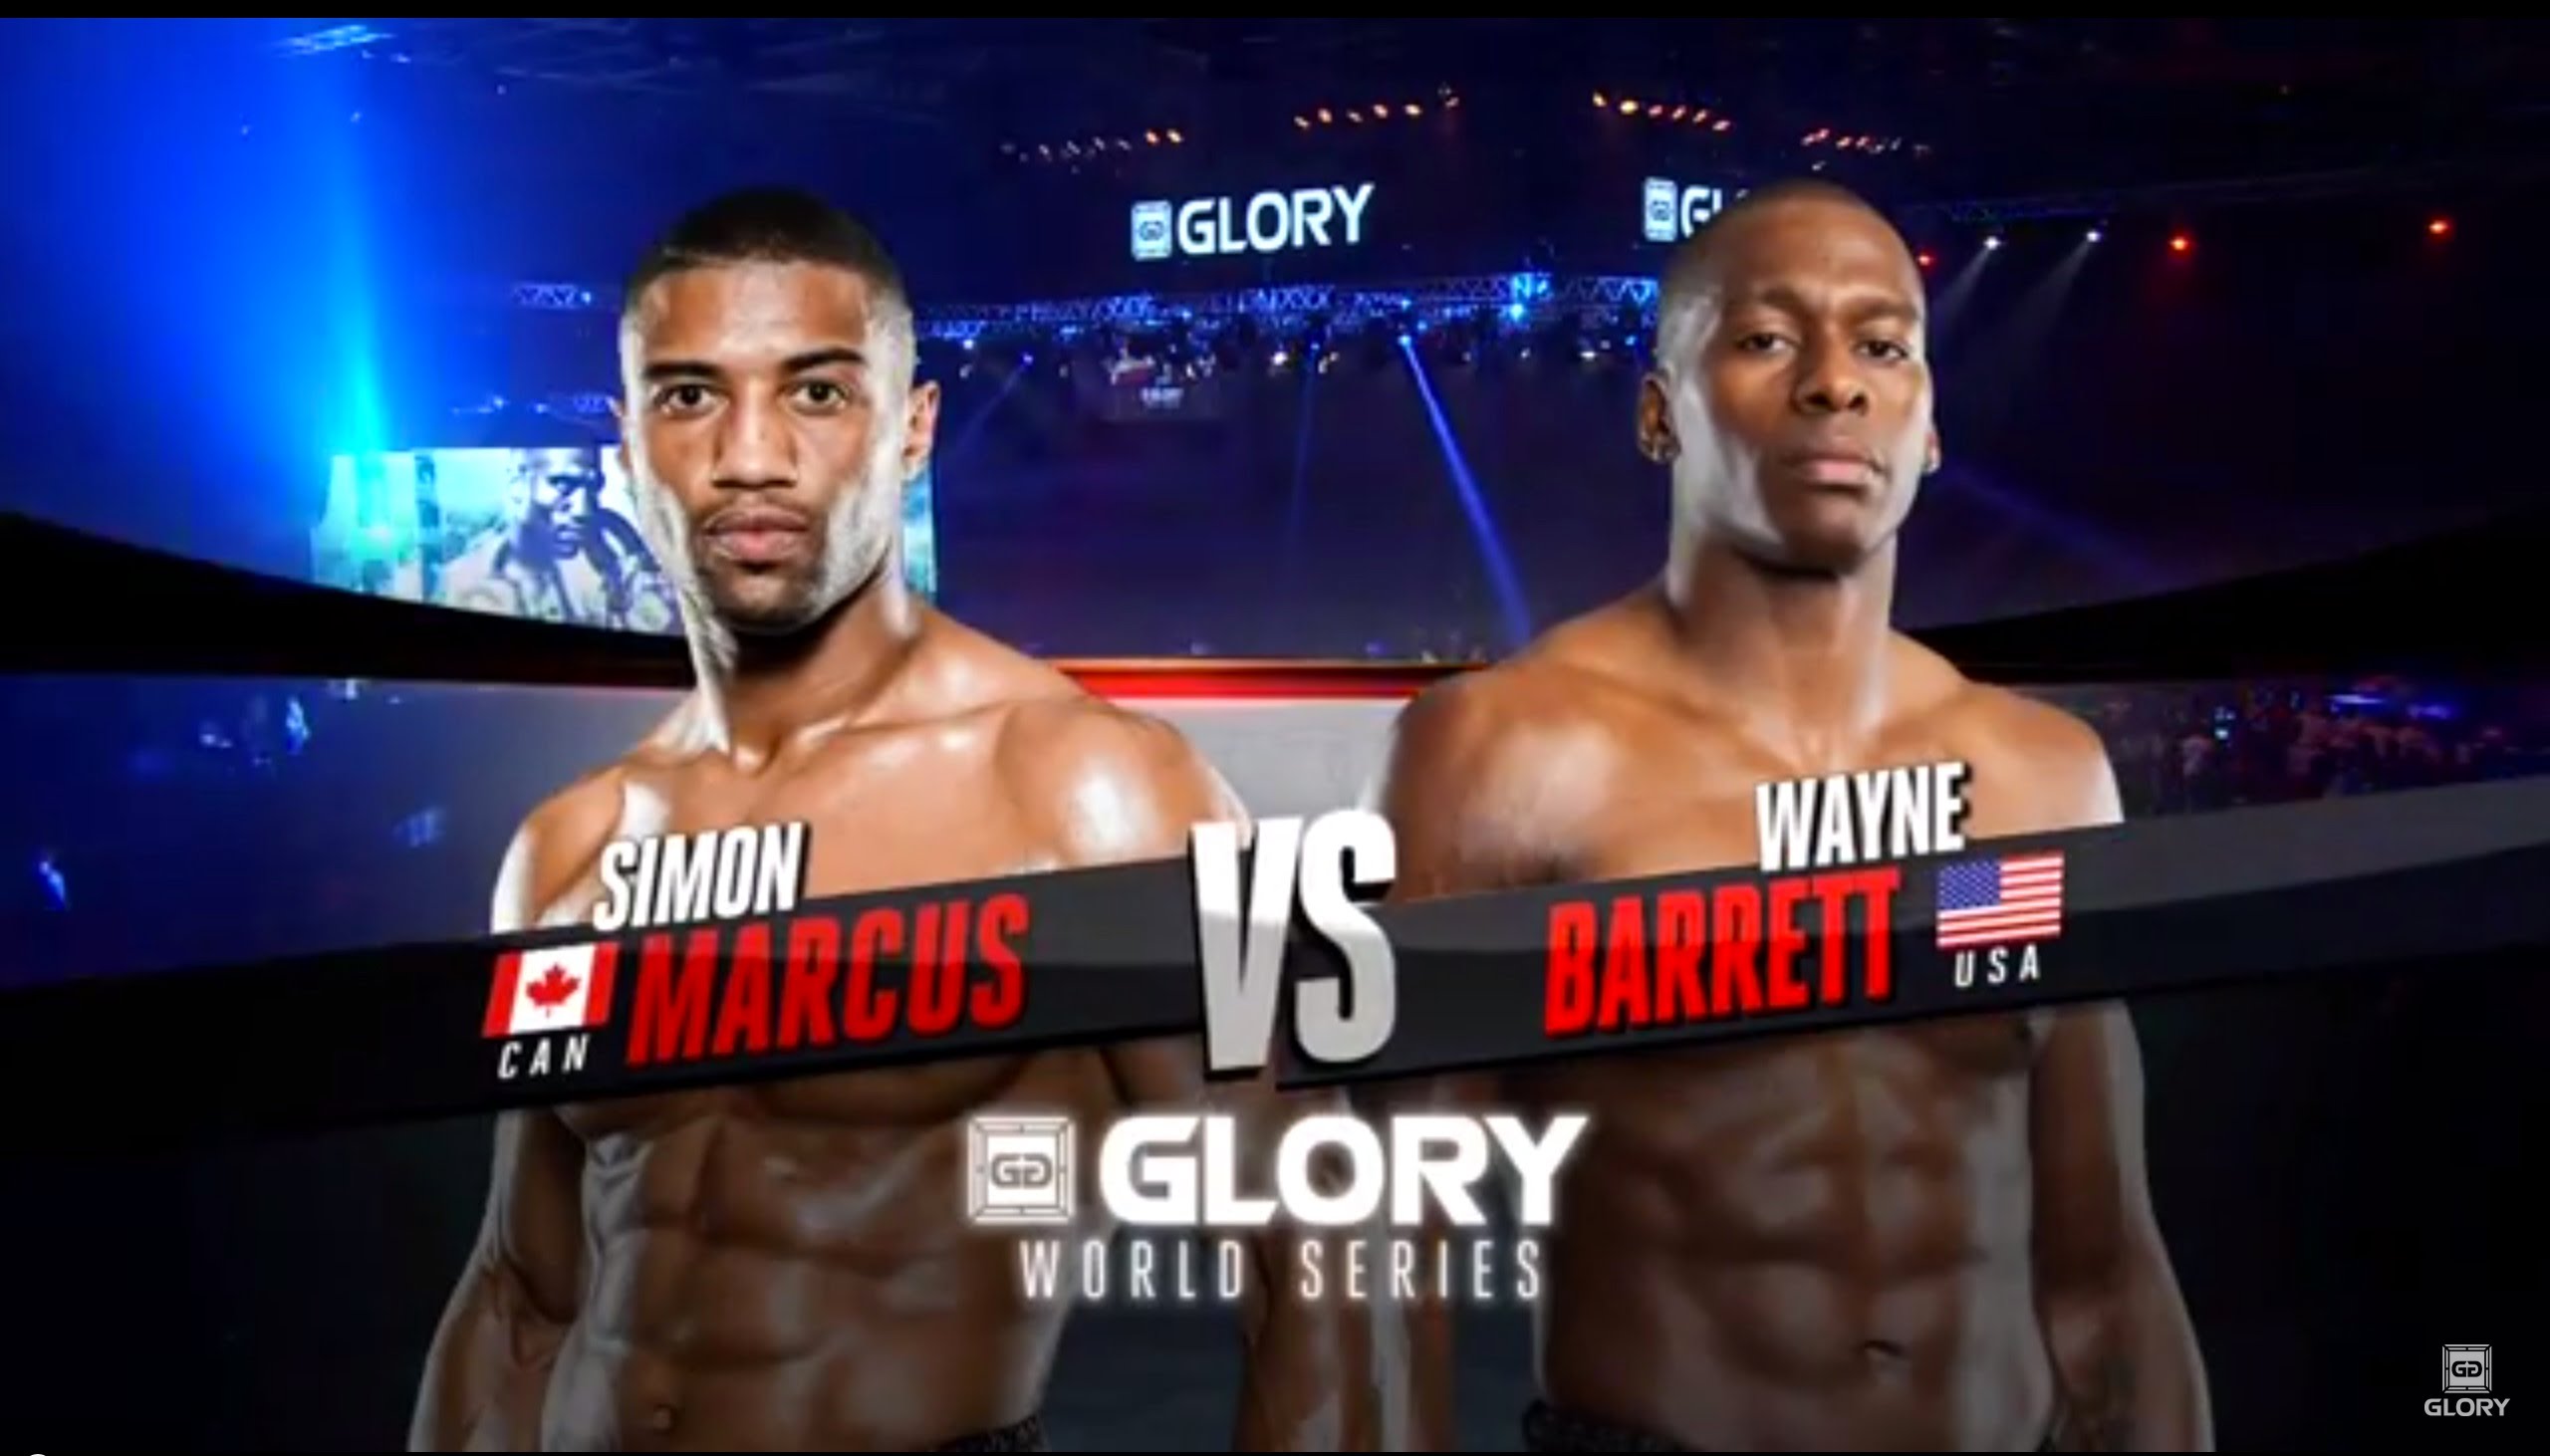 GLORY 20: Simon Marcus vs Wayne Barrett (Full Video) Full Fight MMA...2560 x 1462